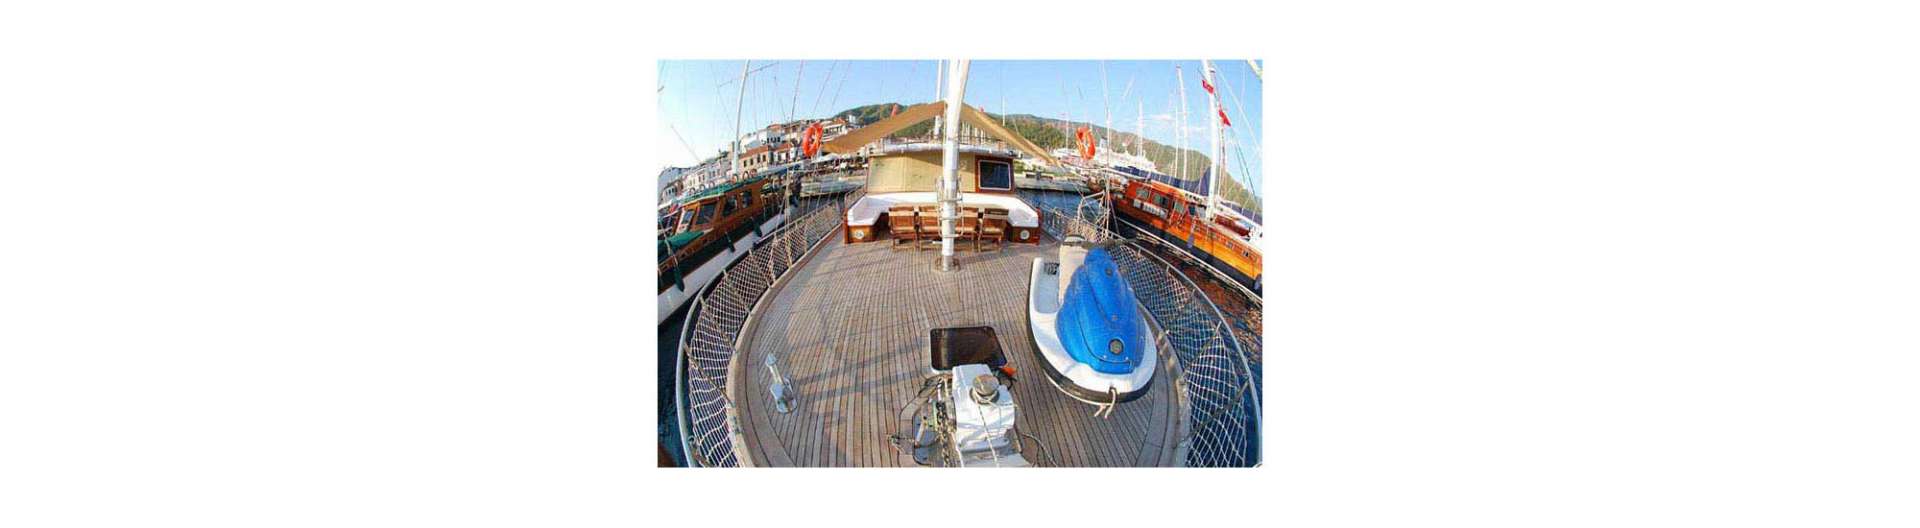 ketch - Deluxe - RIB hire worldwide & Boat hire in Turkey Turkish Riviera Lycian coast Antalya Antalya 6